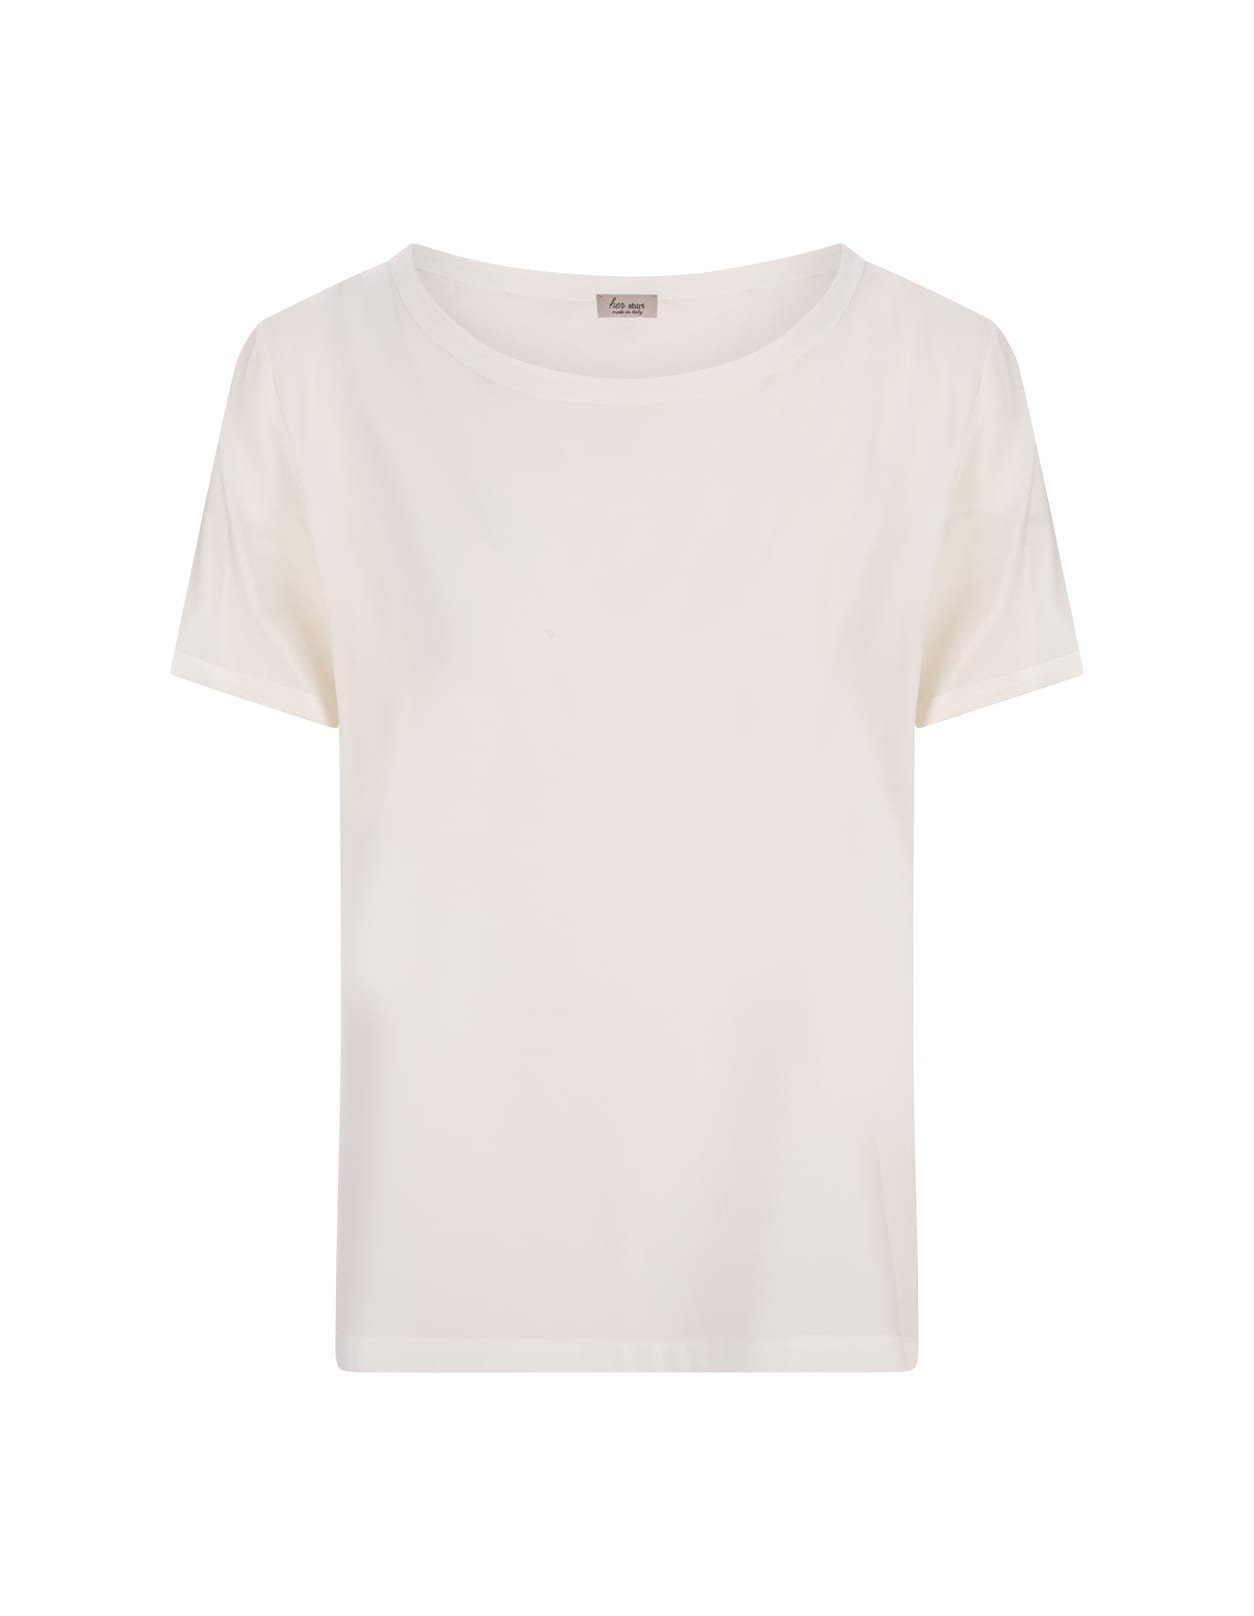 Her Shirt White Opaque Silk T-shirt In Neutral